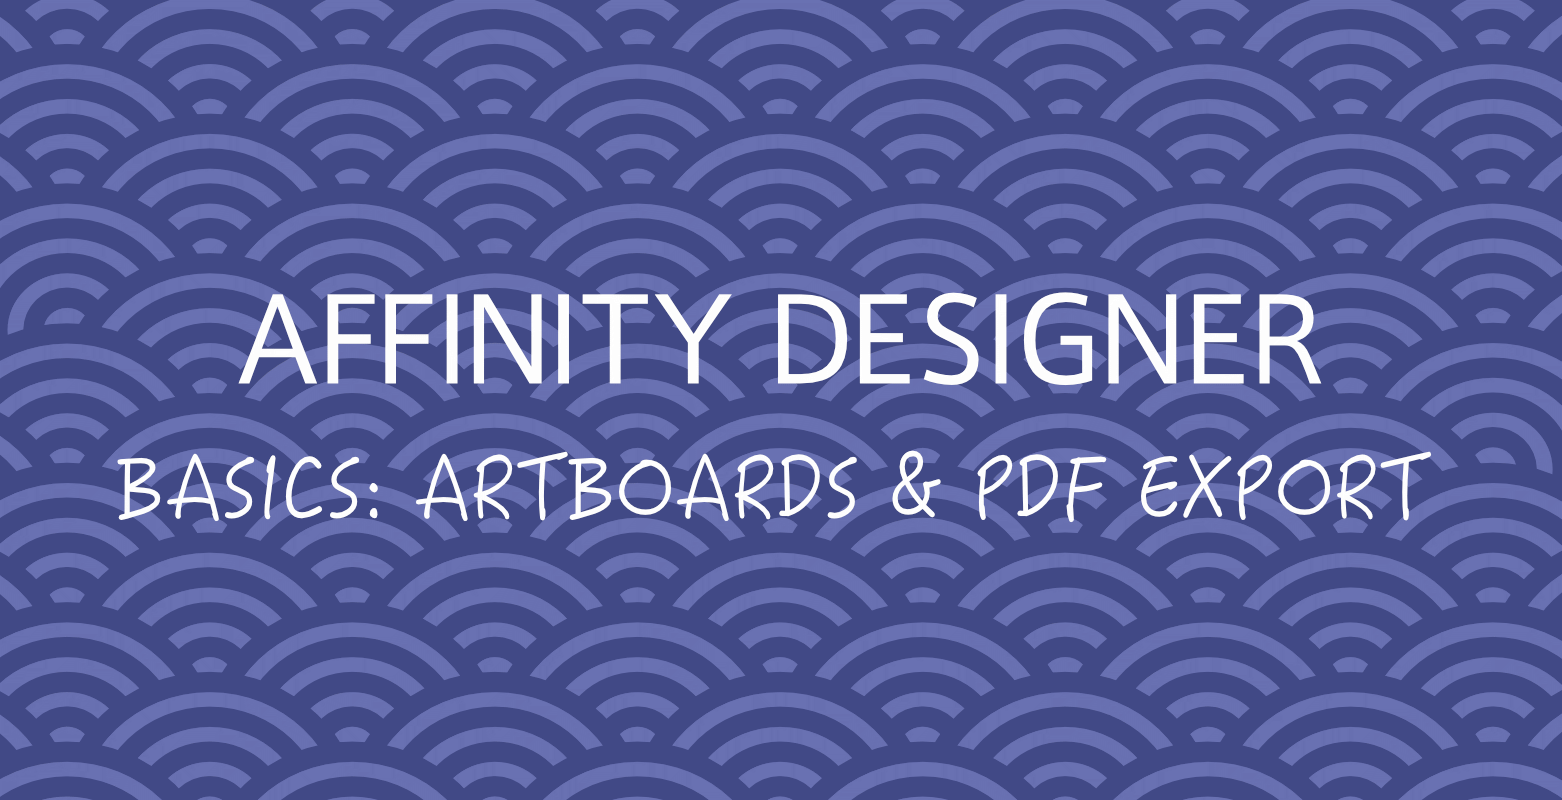 ad-basics-artboards-and-pdf-export